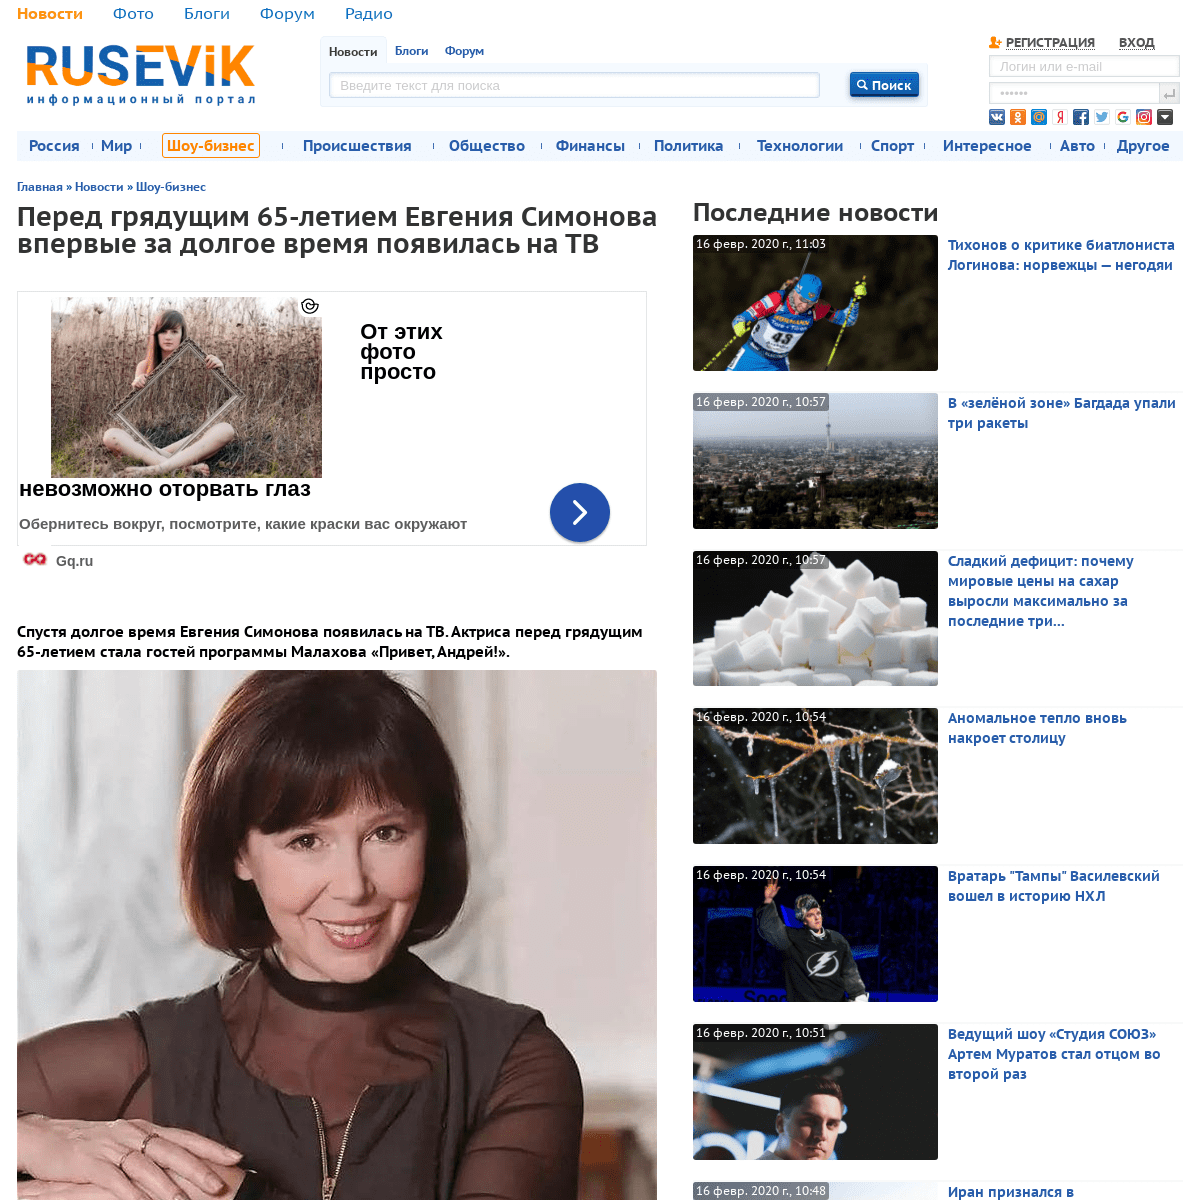 A complete backup of rusevik.ru/news/585890